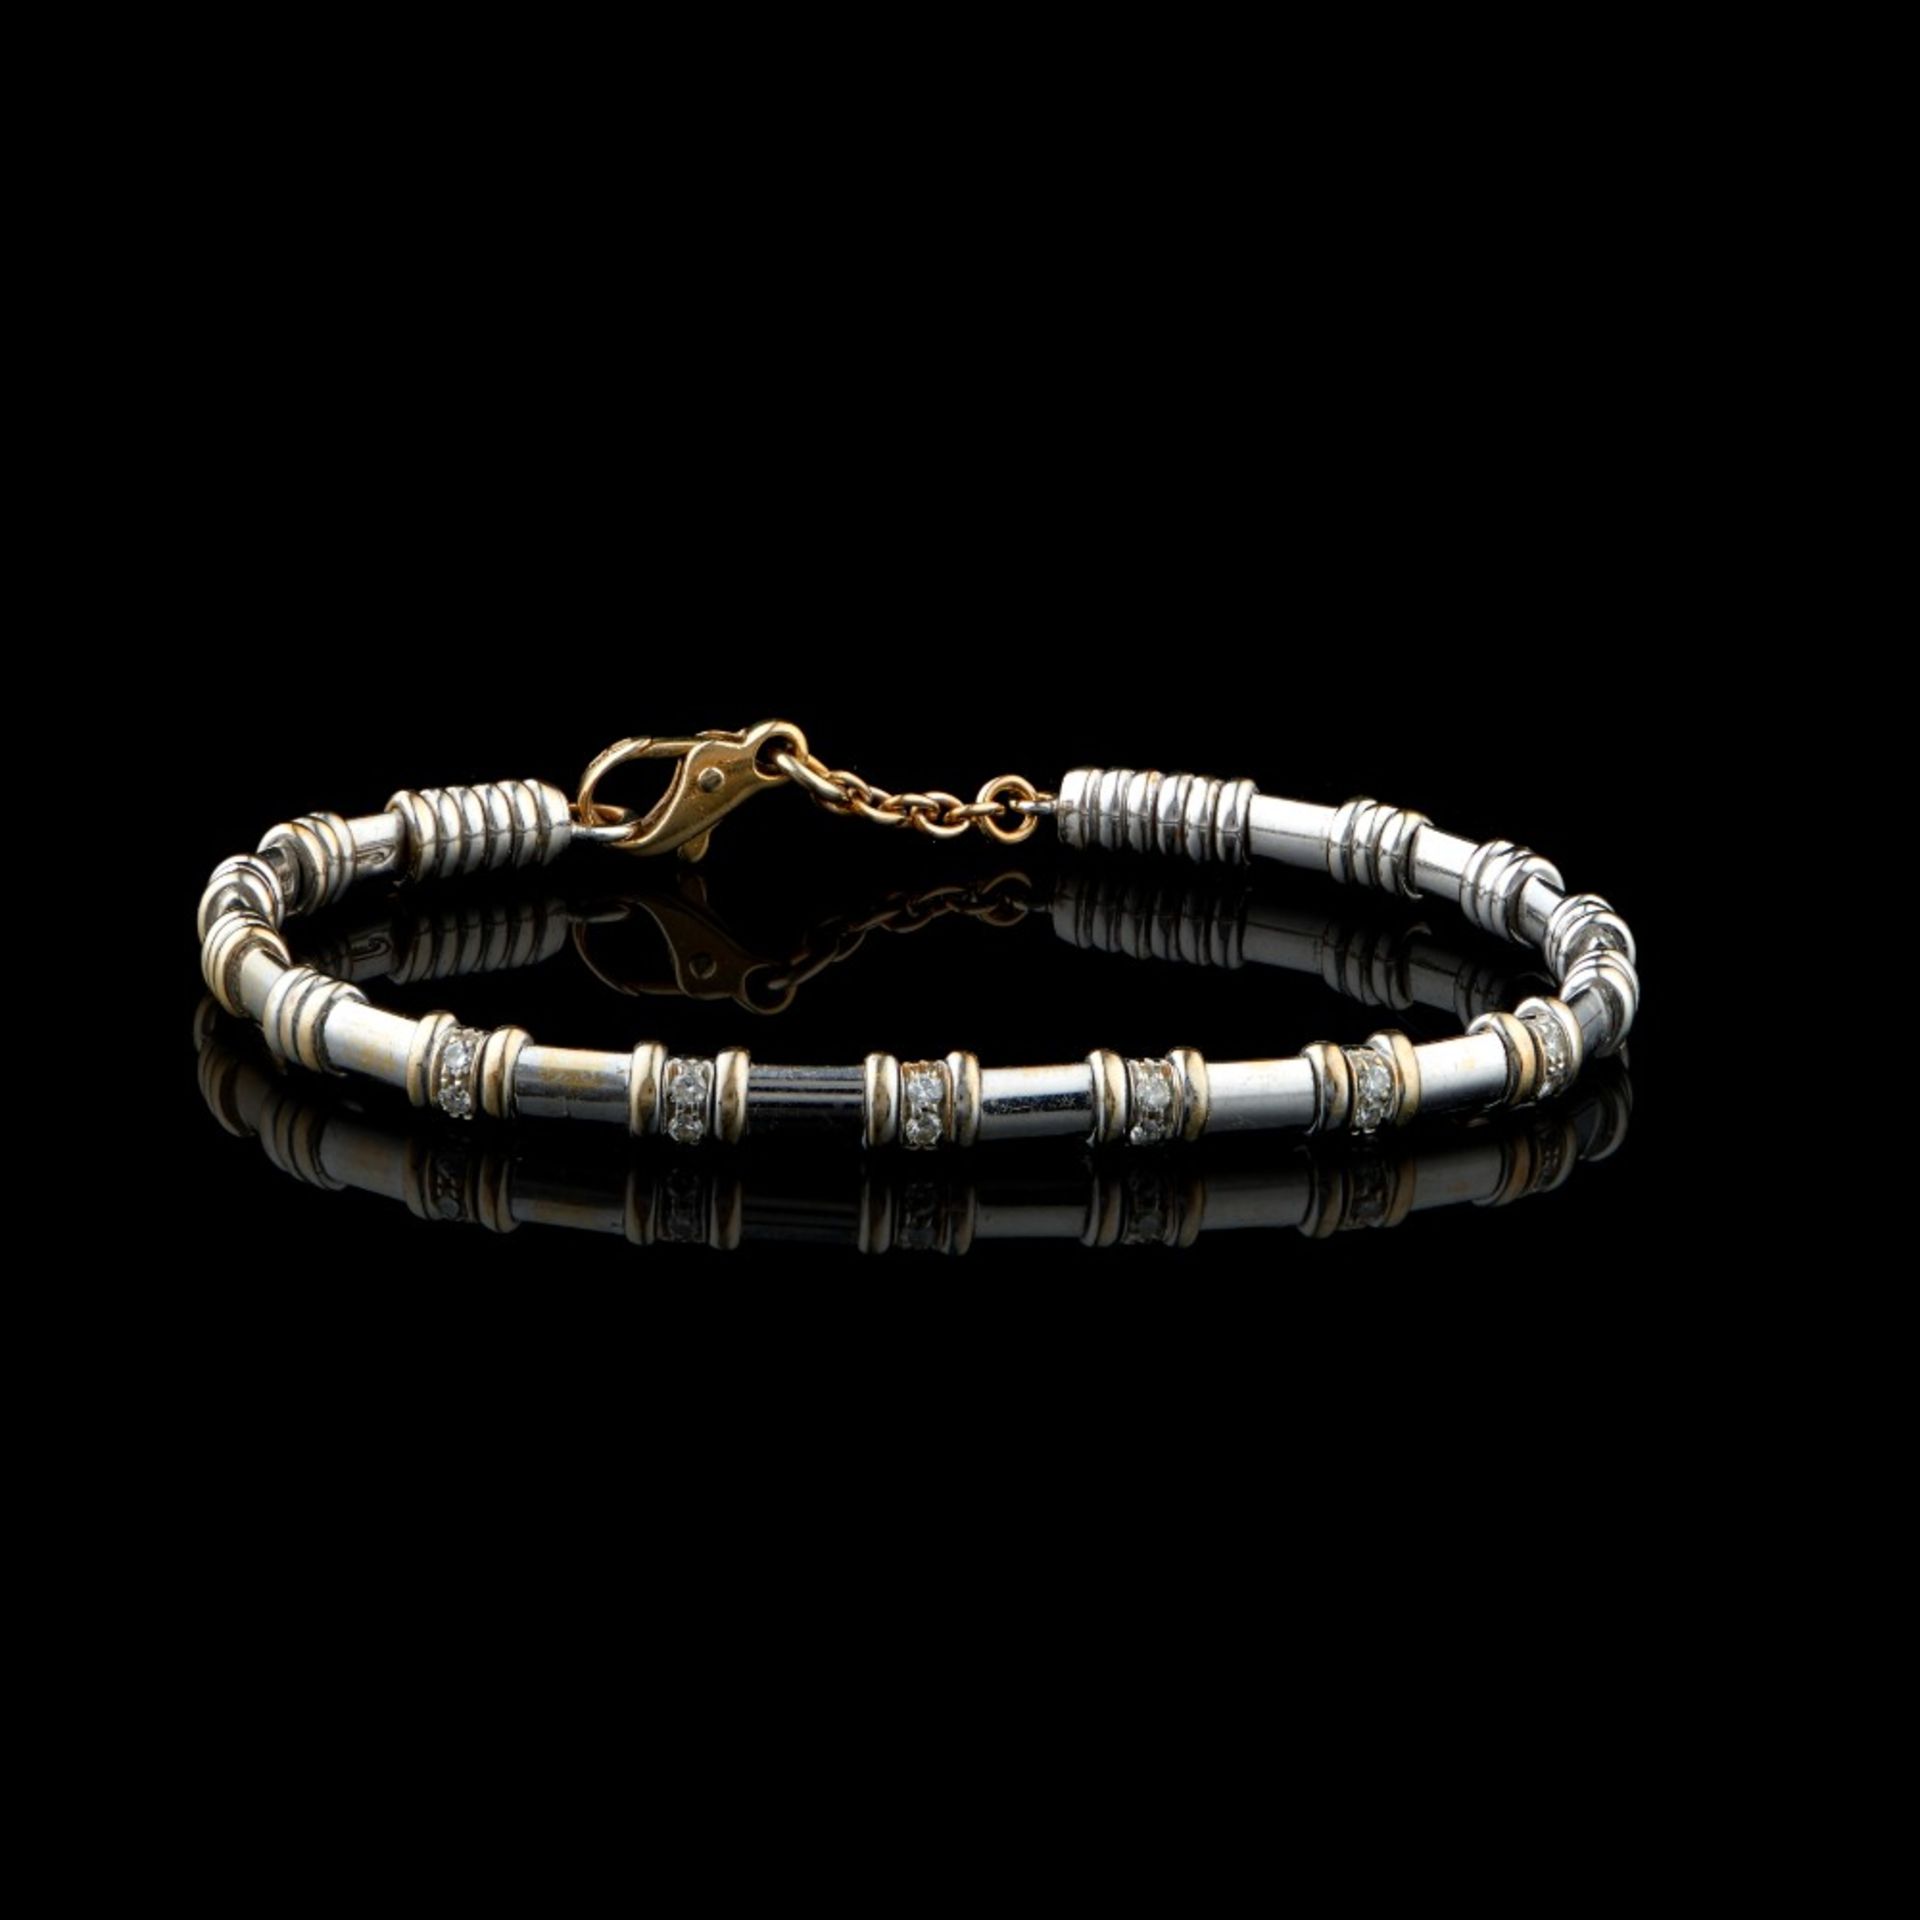  A semi-rigid bracelet